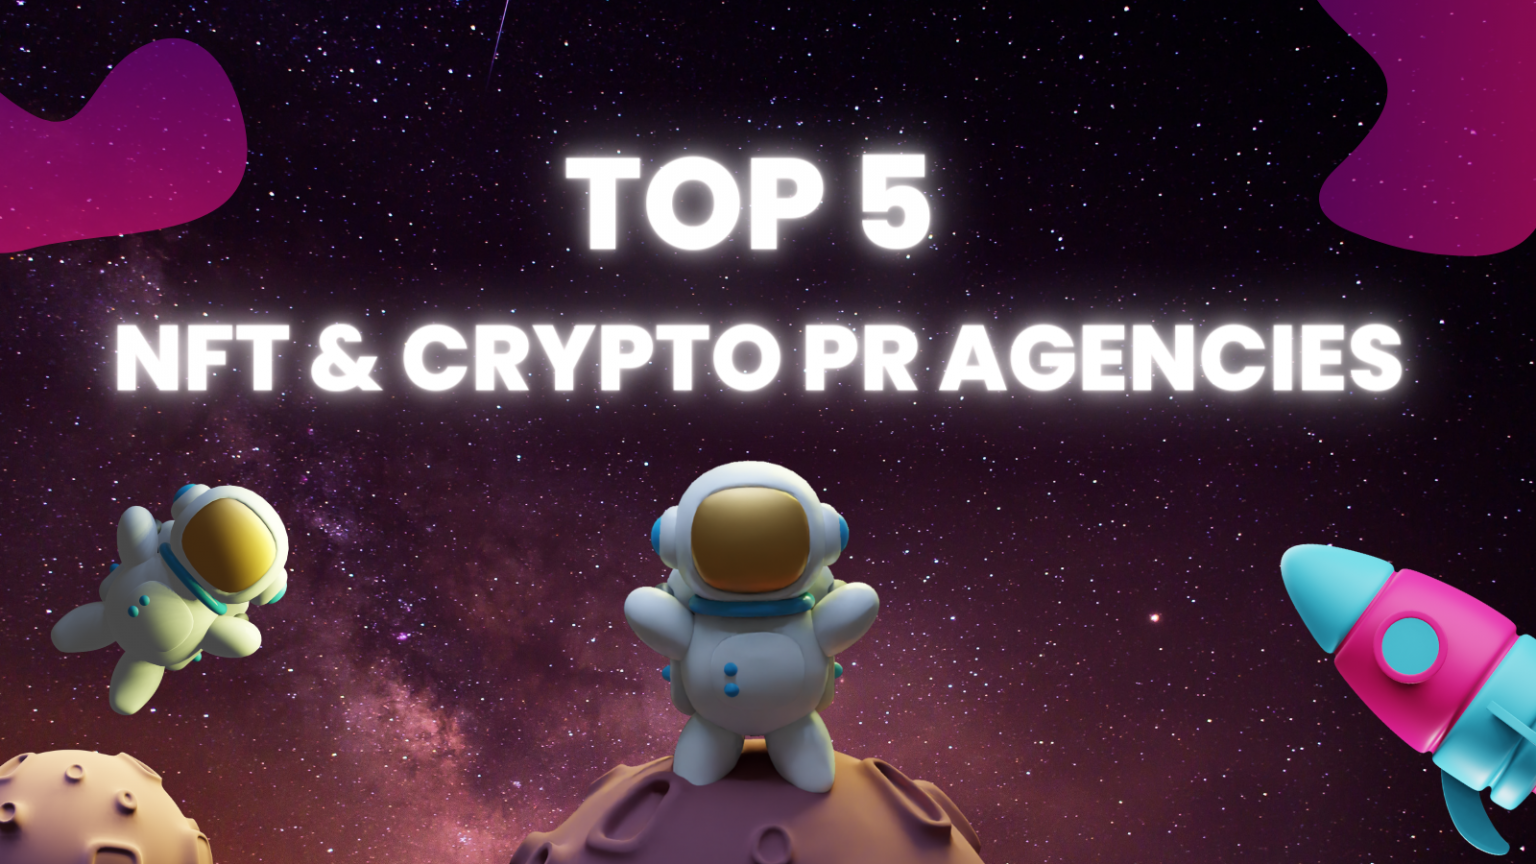 Top 5 NFT and crypto PR agencies